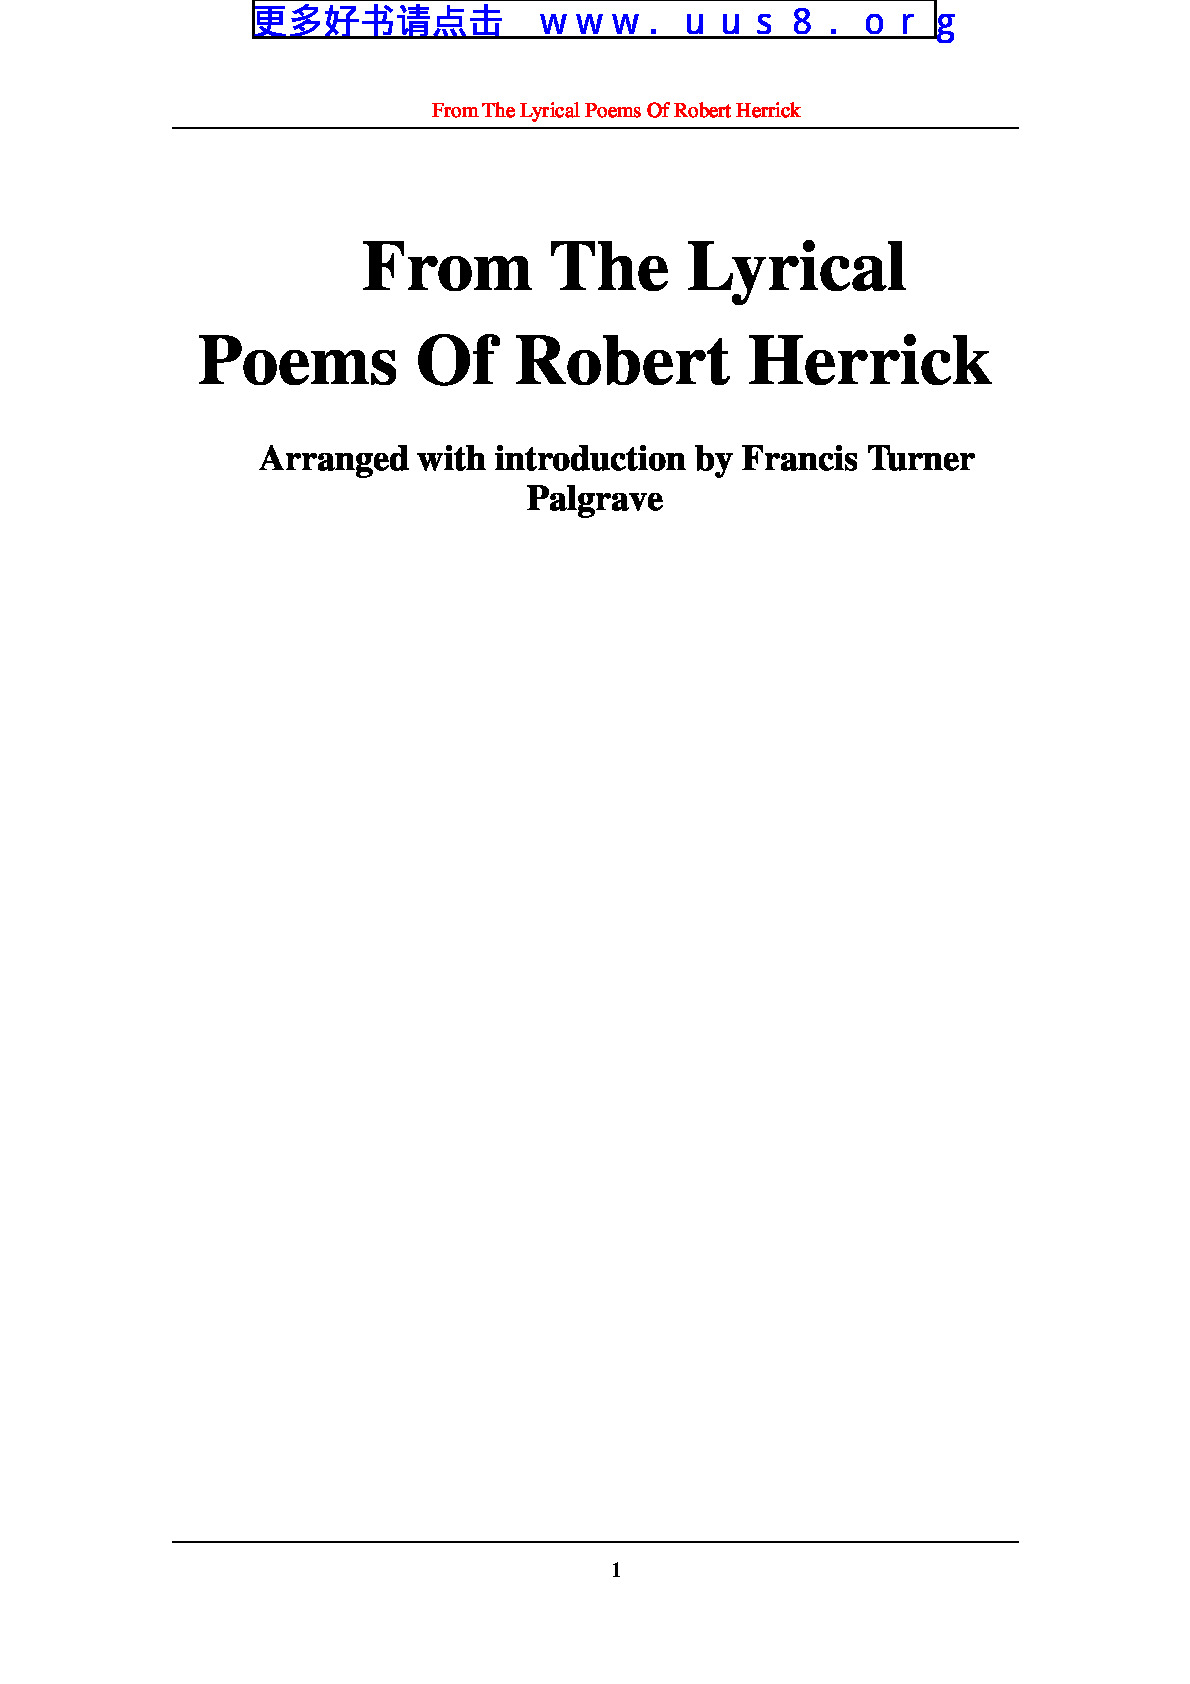 From_The_Lyrical_Poems_Of_Robert_Herrick(罗伯特赫里克抒情歌谣选)